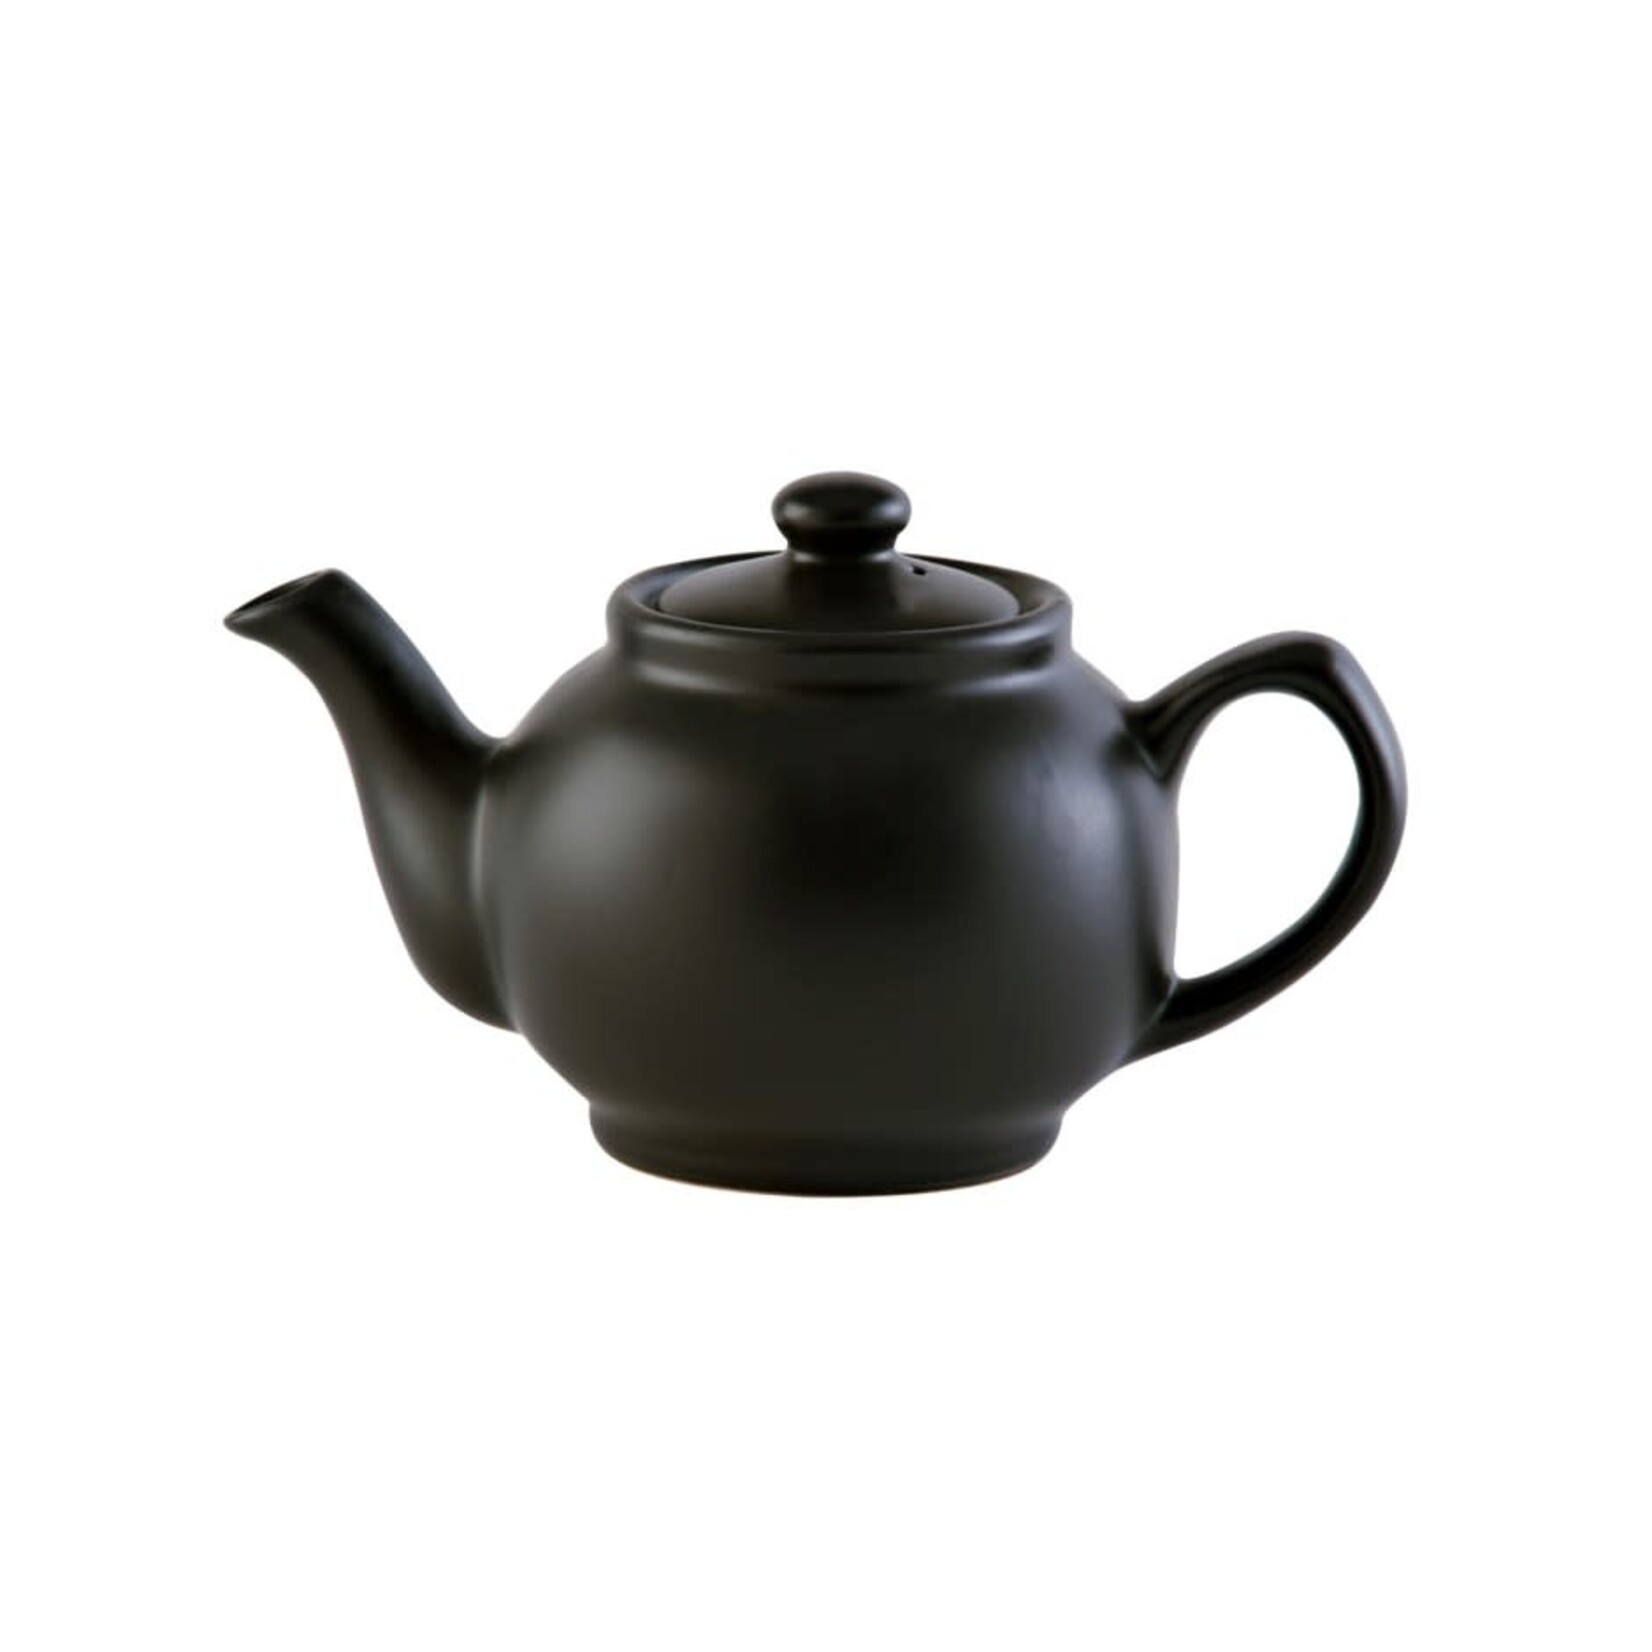 PRICE & KENSINGTON PRICE & KENSINGTON Matte Teapot 2 Cup- Black